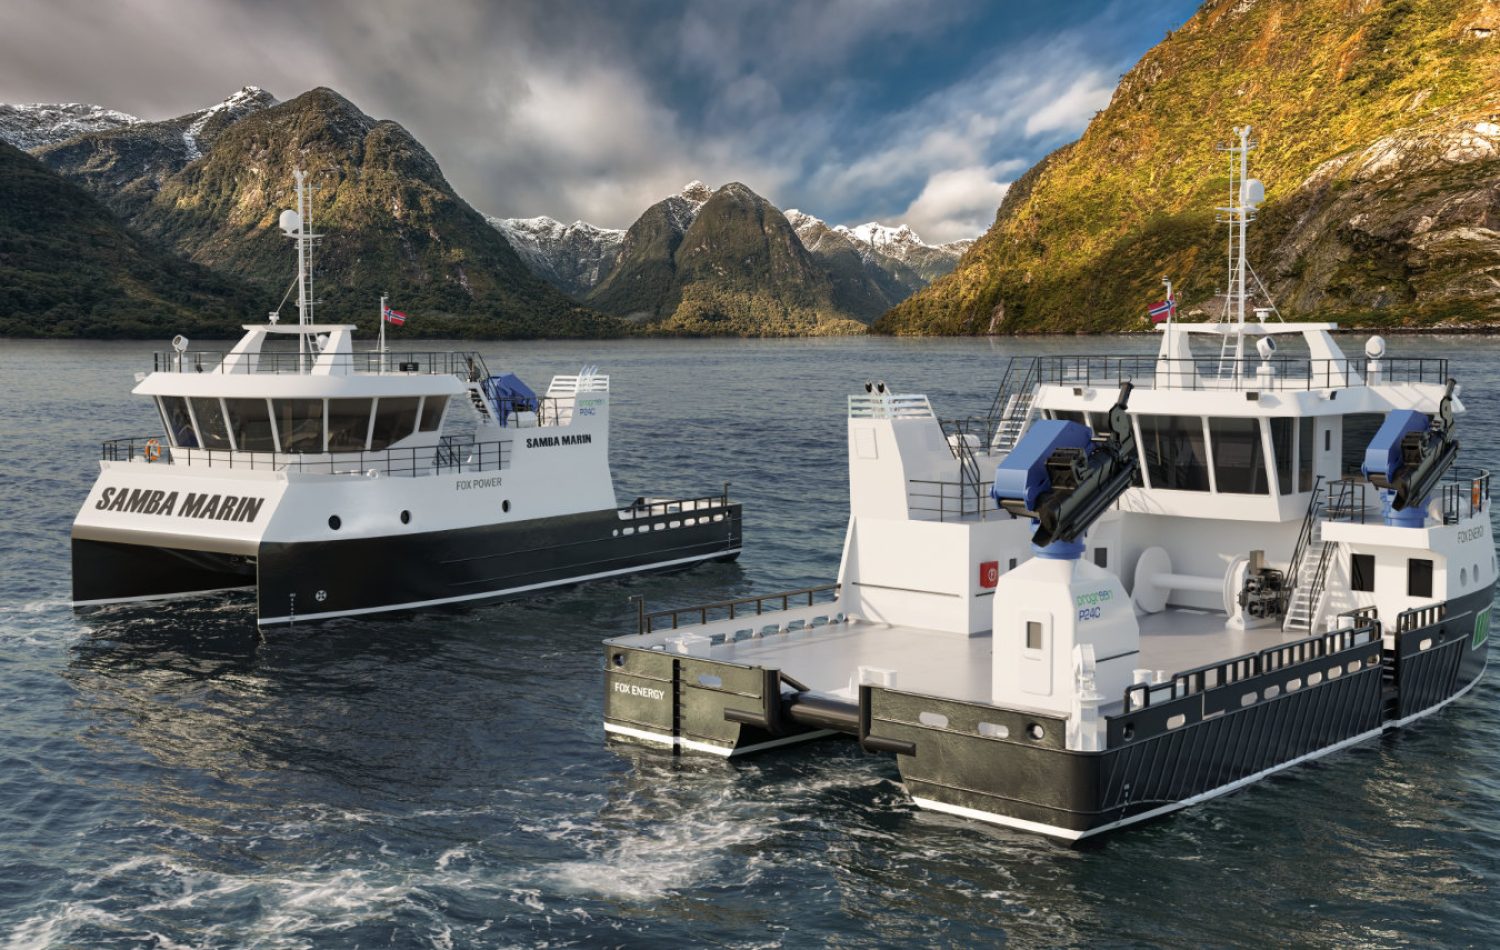 3D rendering hybrid workboat visualization in Norwegian fiords